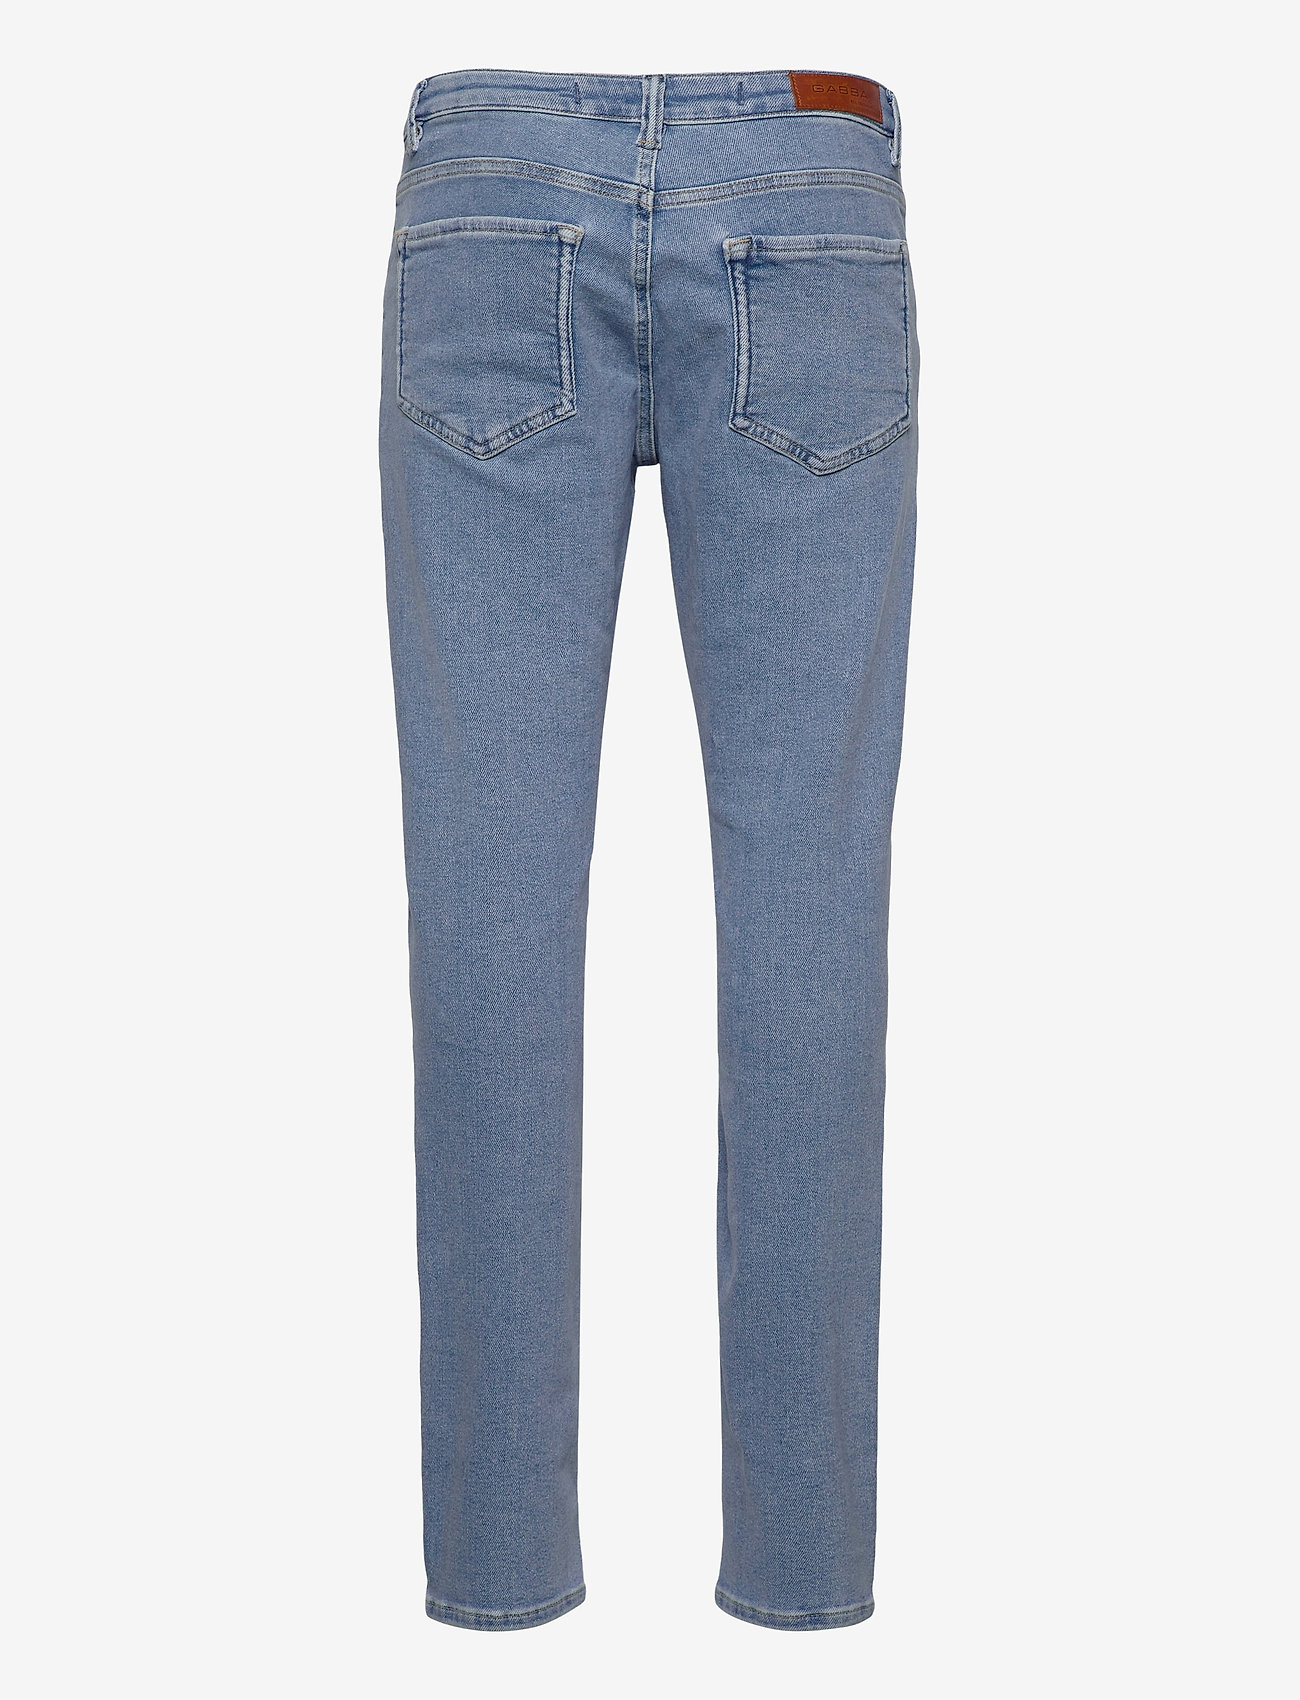 Gabba - Jones K3826 Jeans - slim jeans - rs1359 - 1